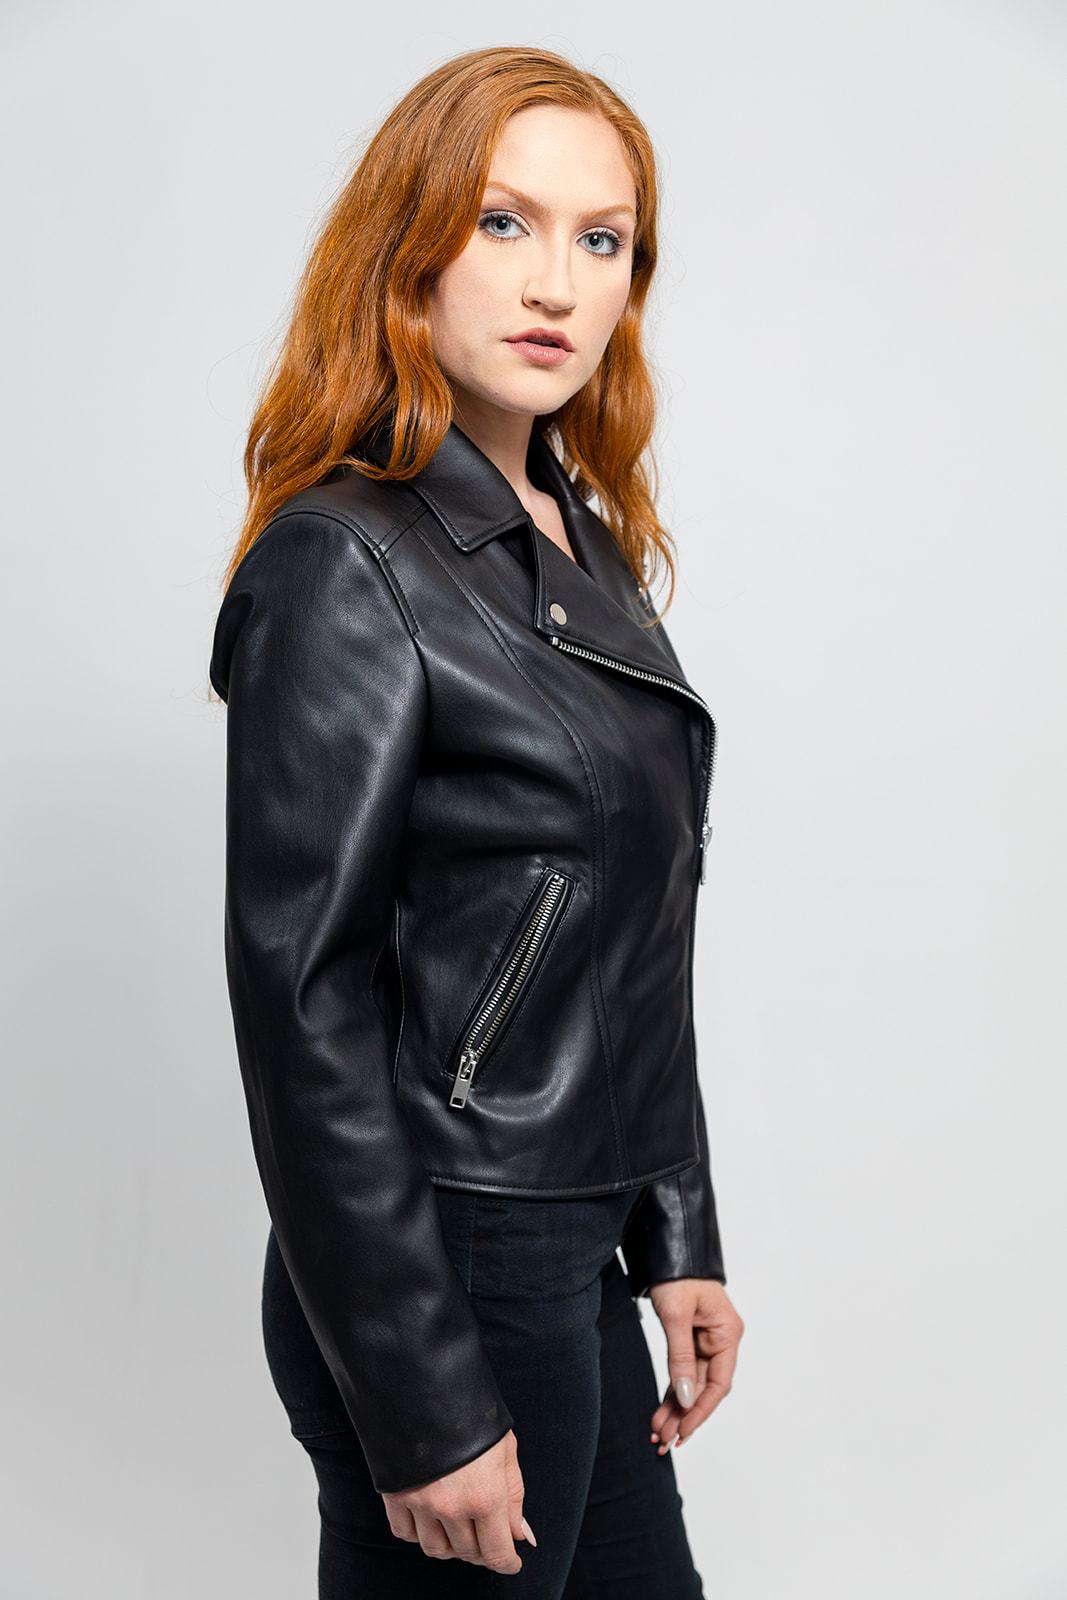 Demi Women's Vegan Faux Leather Jacket Women's Fashion Leather Jacket Whet Blu NYC   